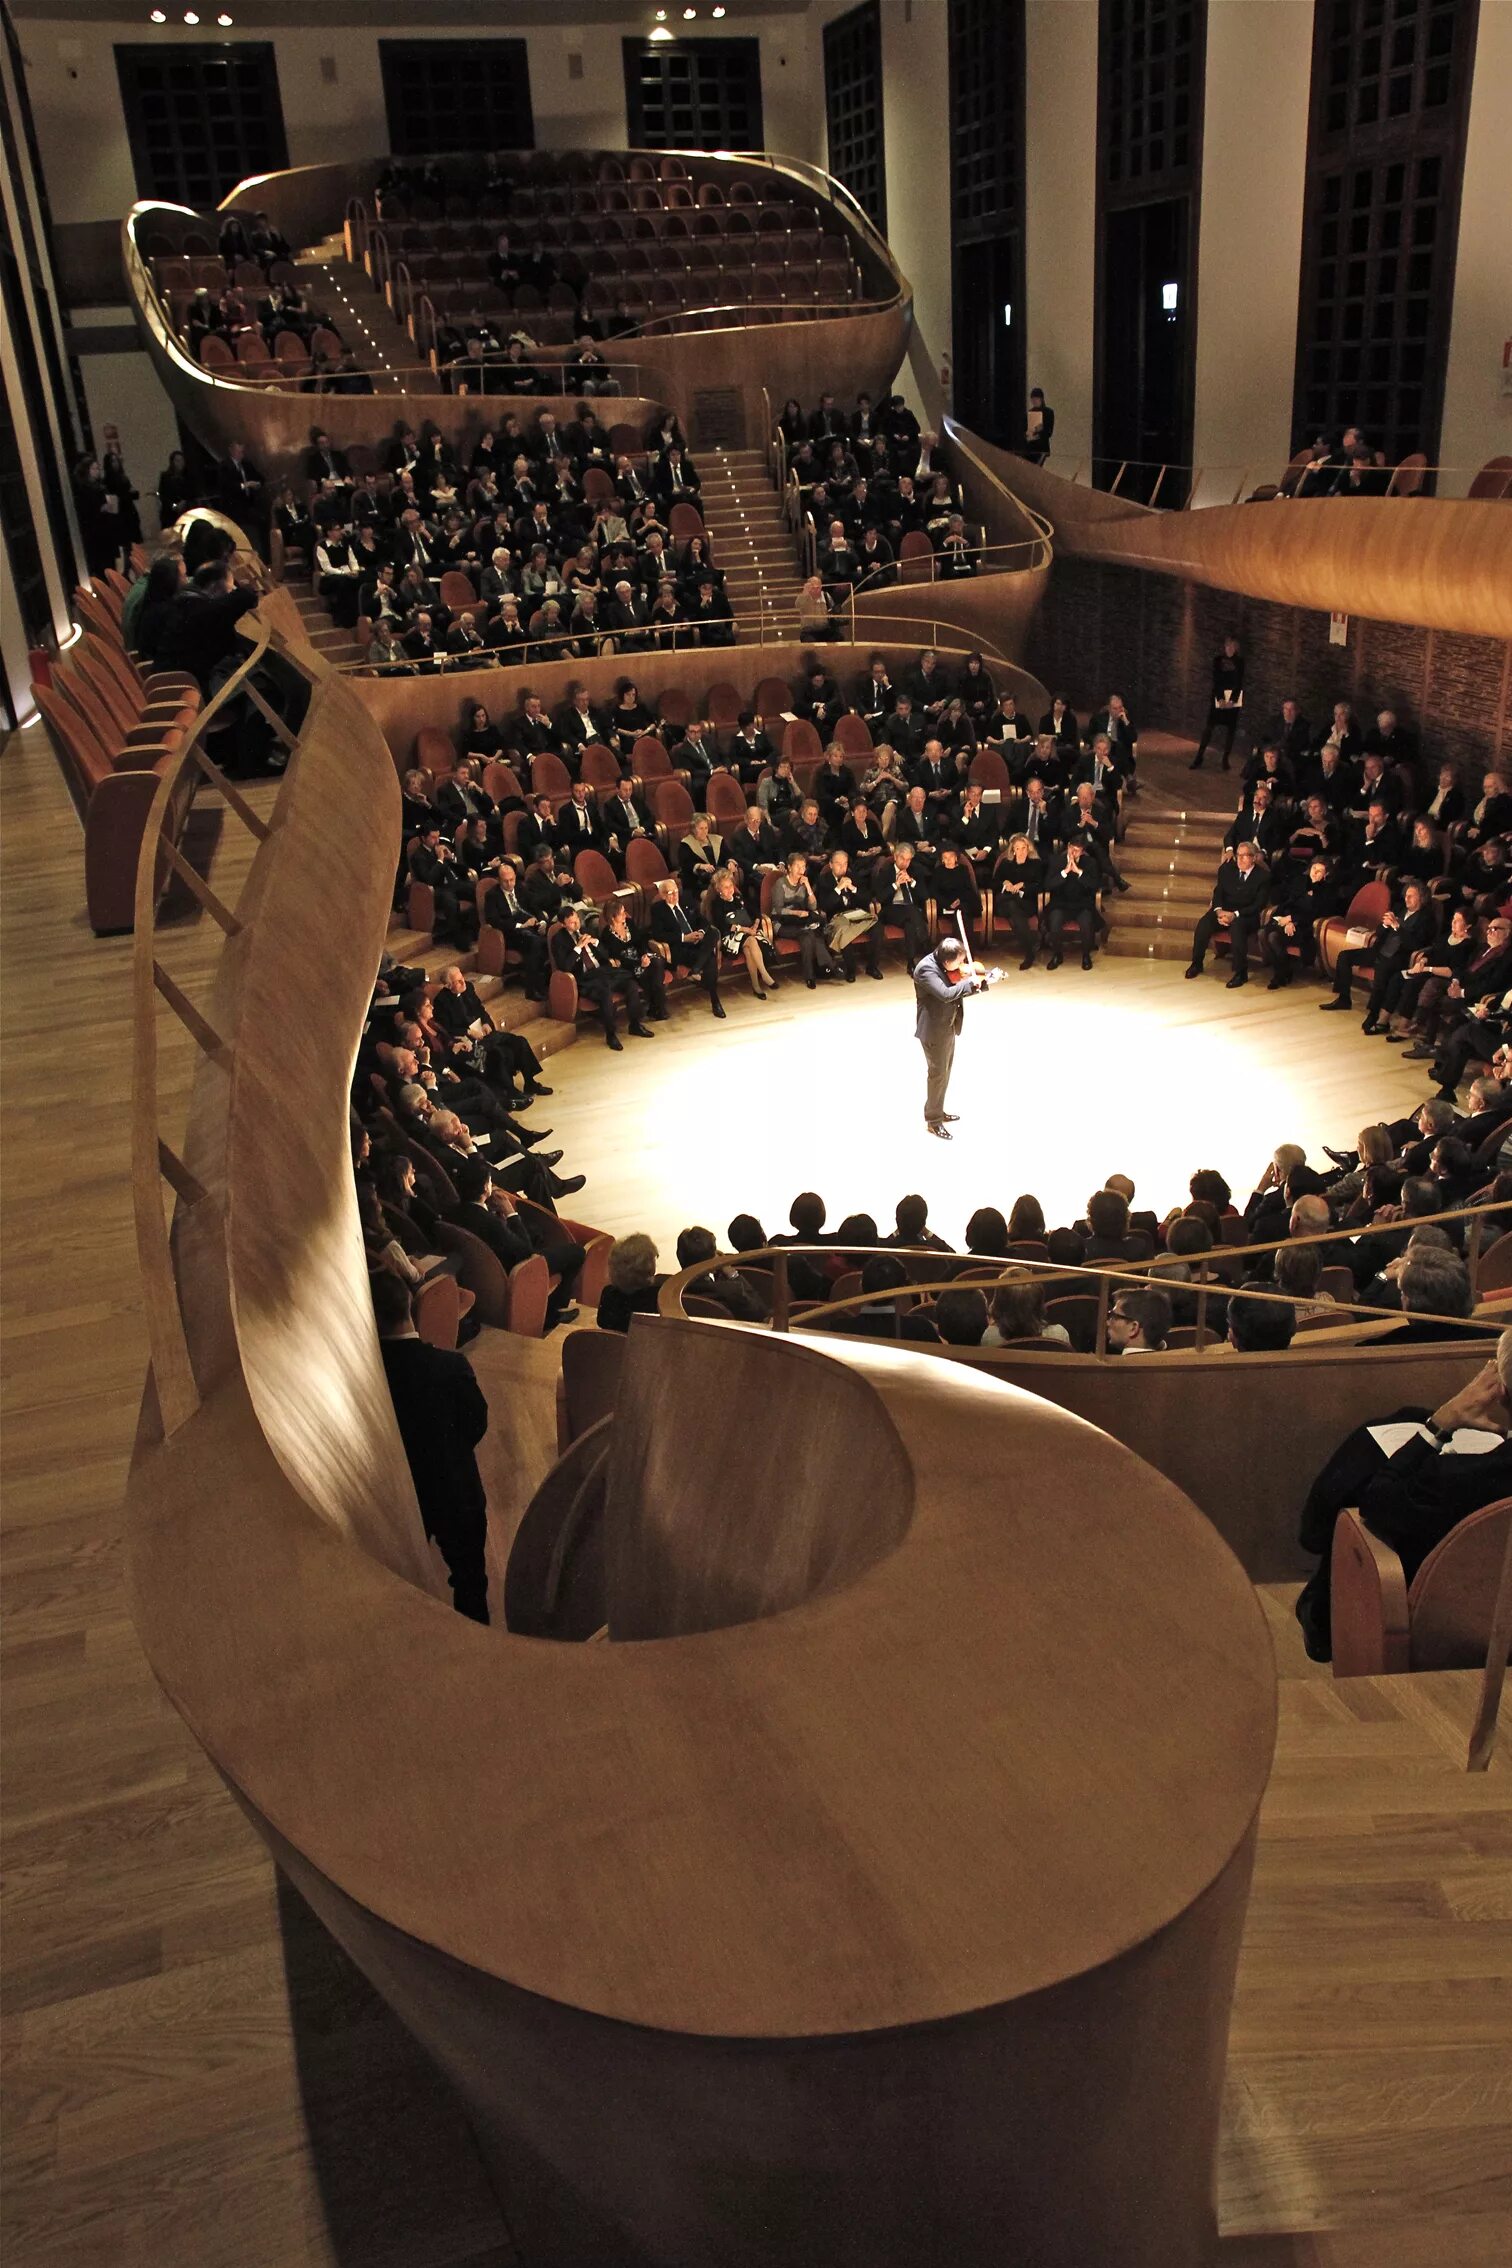 Театр скрипка. Аудиториум Джованни Арведи. Museo del Violino концертный зал. Скрипка театр. Мюзикл архитектура.